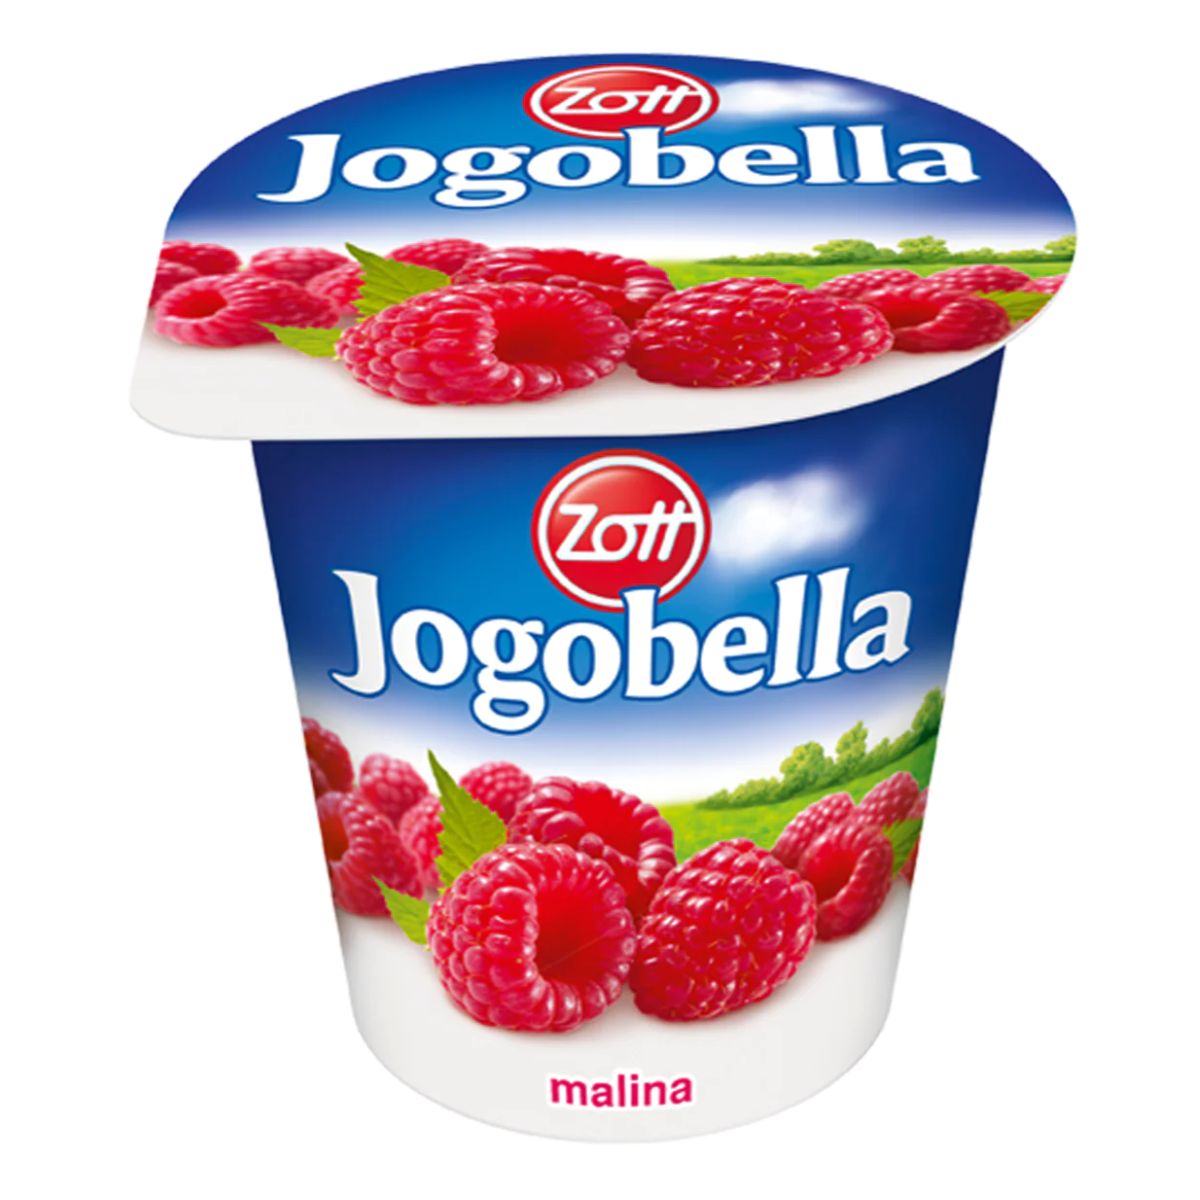 Twin pack of Zott - Jogobella Raspberry - 400g yogurt.